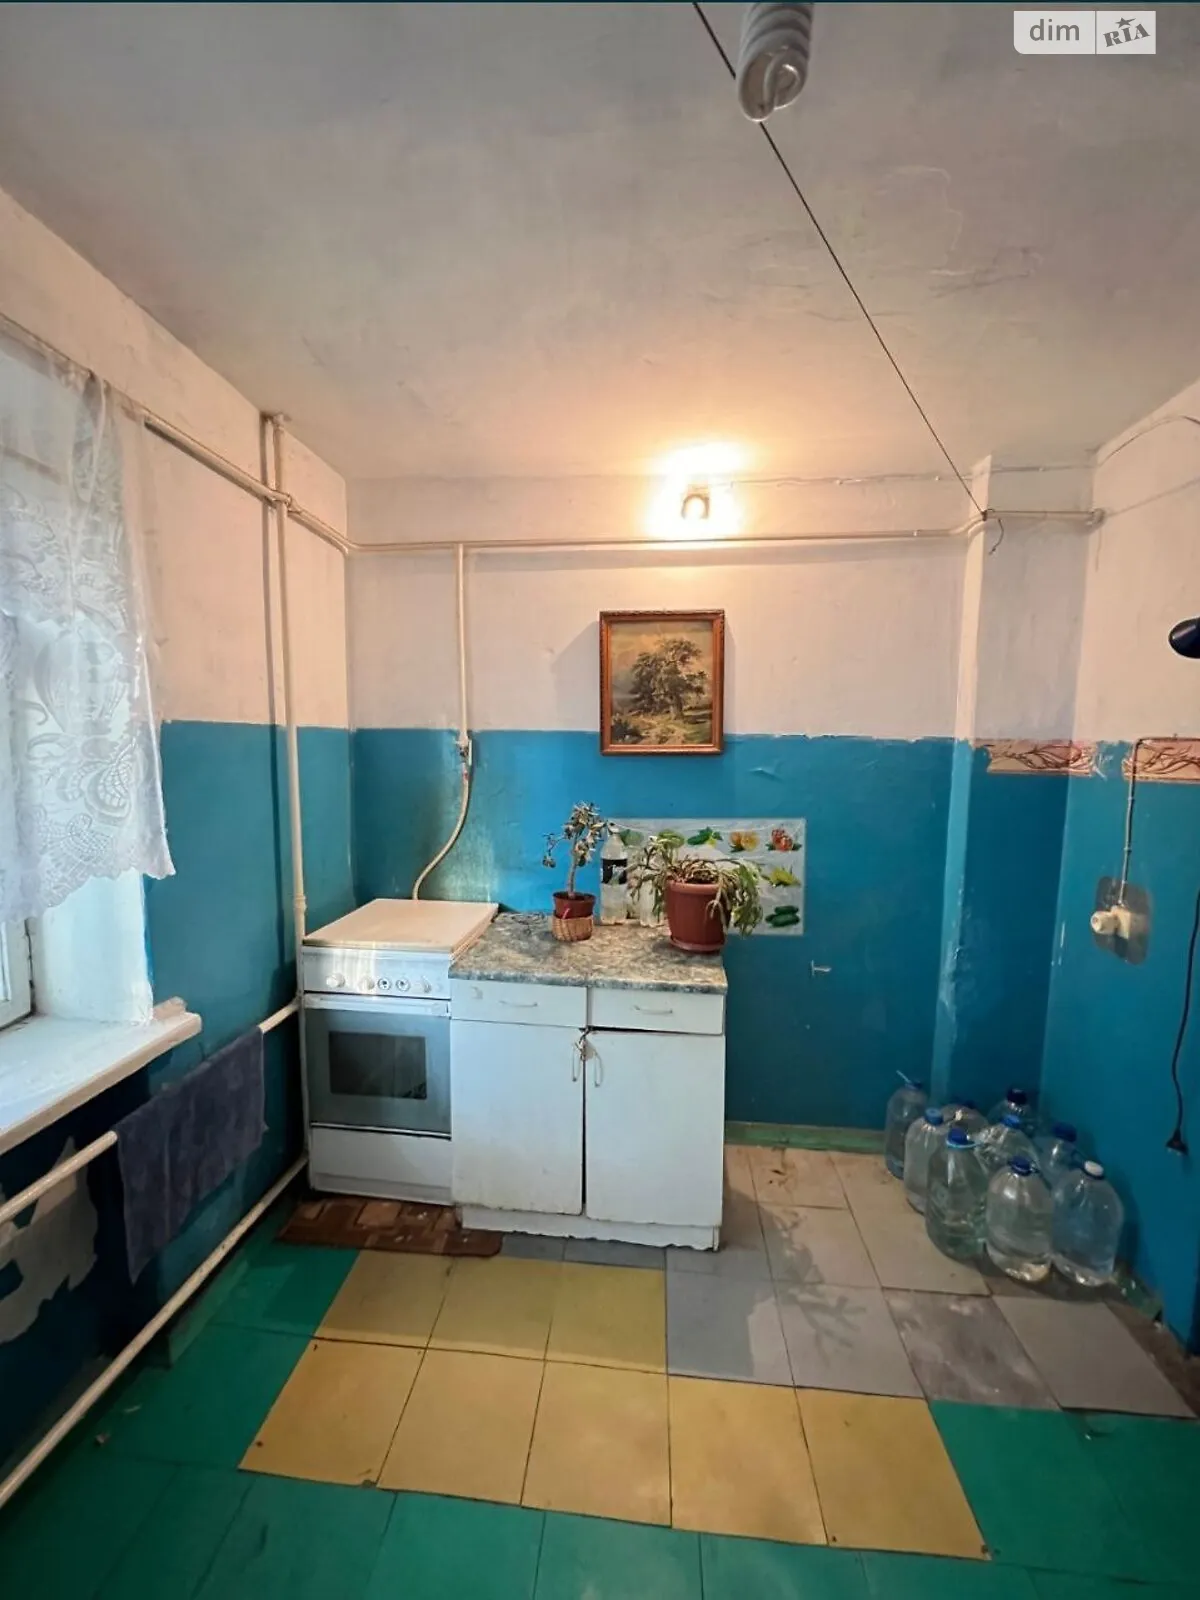 Продается комната 24.4 кв. м в Николаеве - фото 2